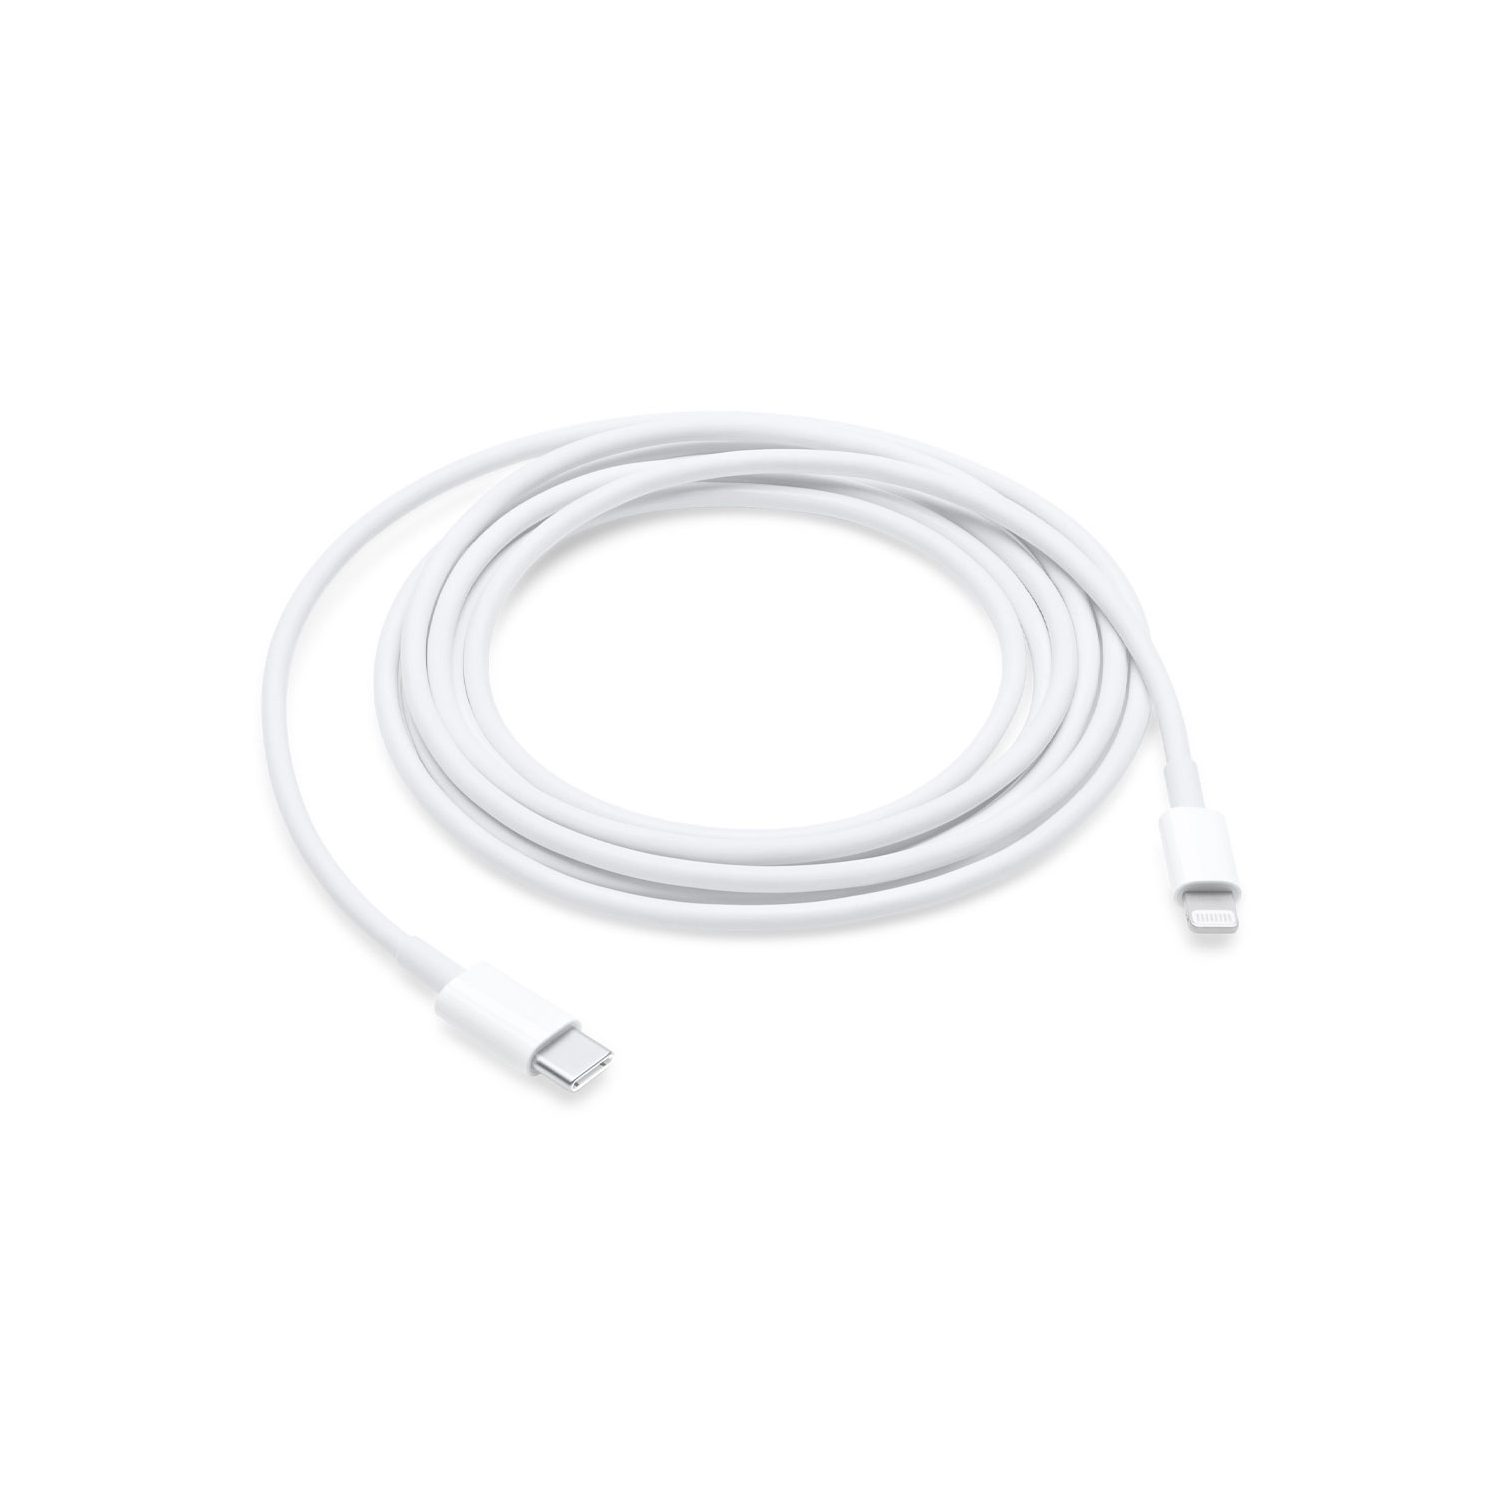 Apple Original USB-C to Lightning Cable (1 m) - Brand New